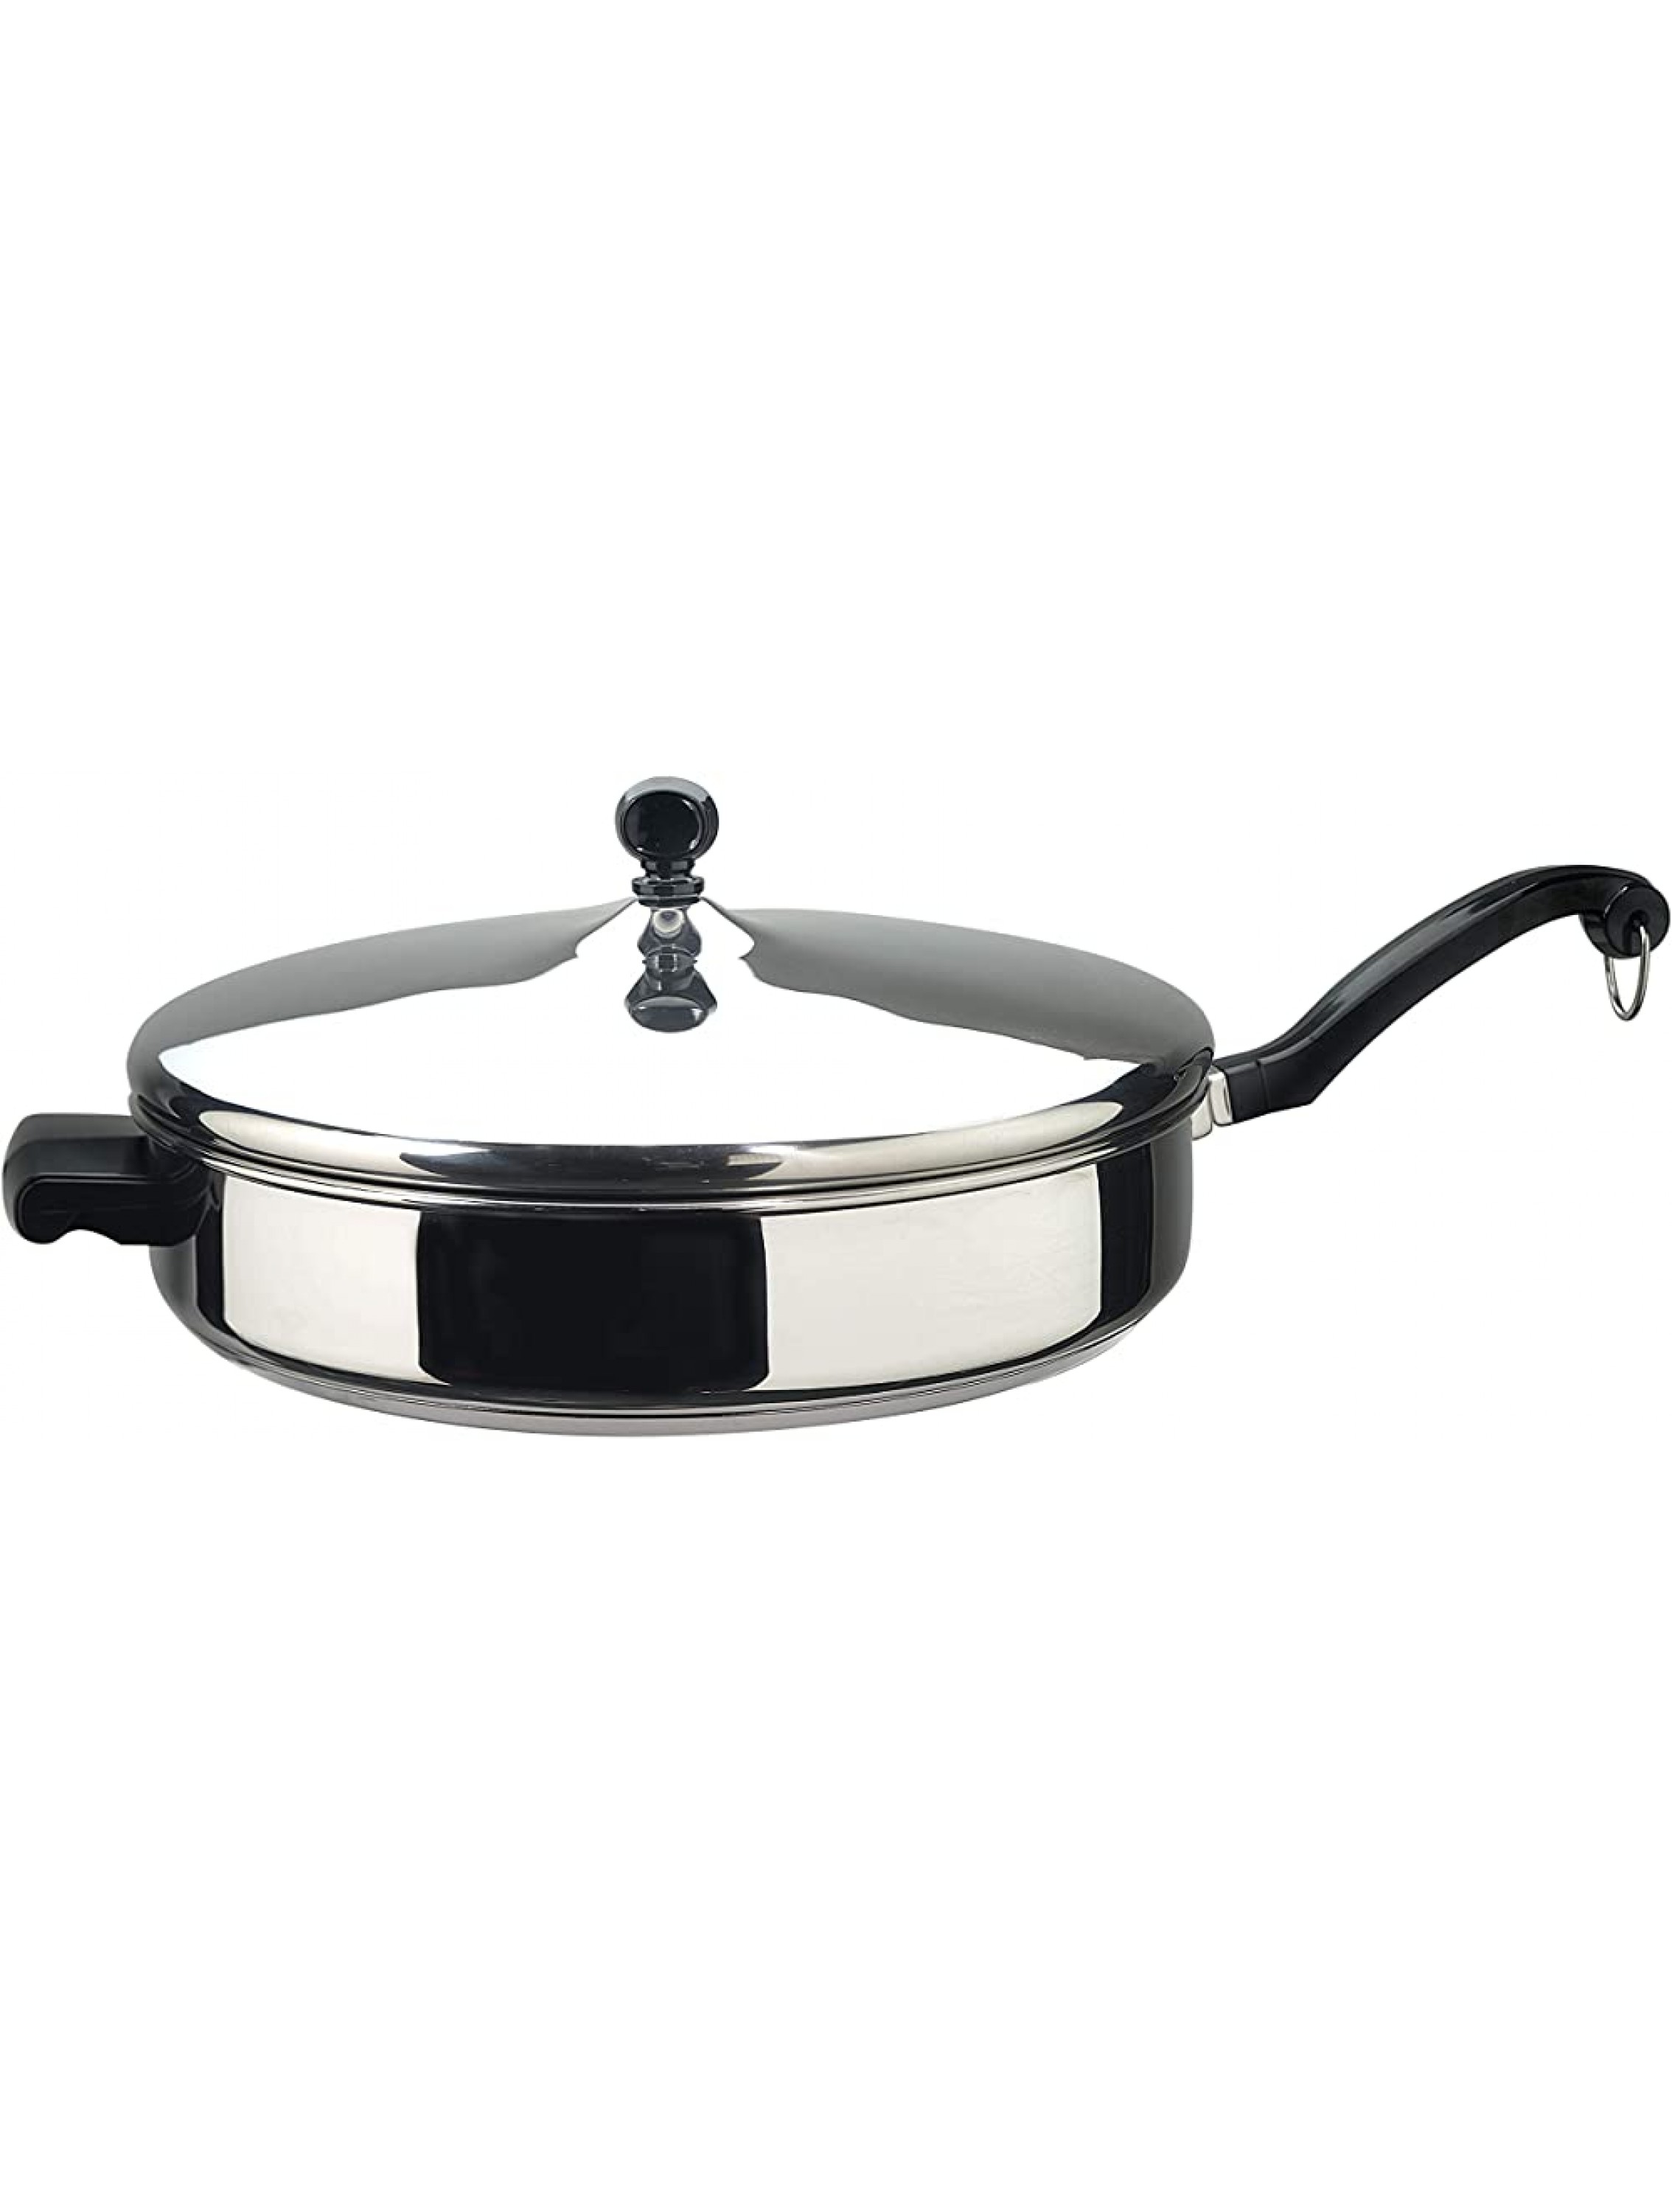 Farberware Classic Saute Pan Frying Pan Fry Pan with Lid and Helper Handle 4.5 Quart Silver - BON96SPIY